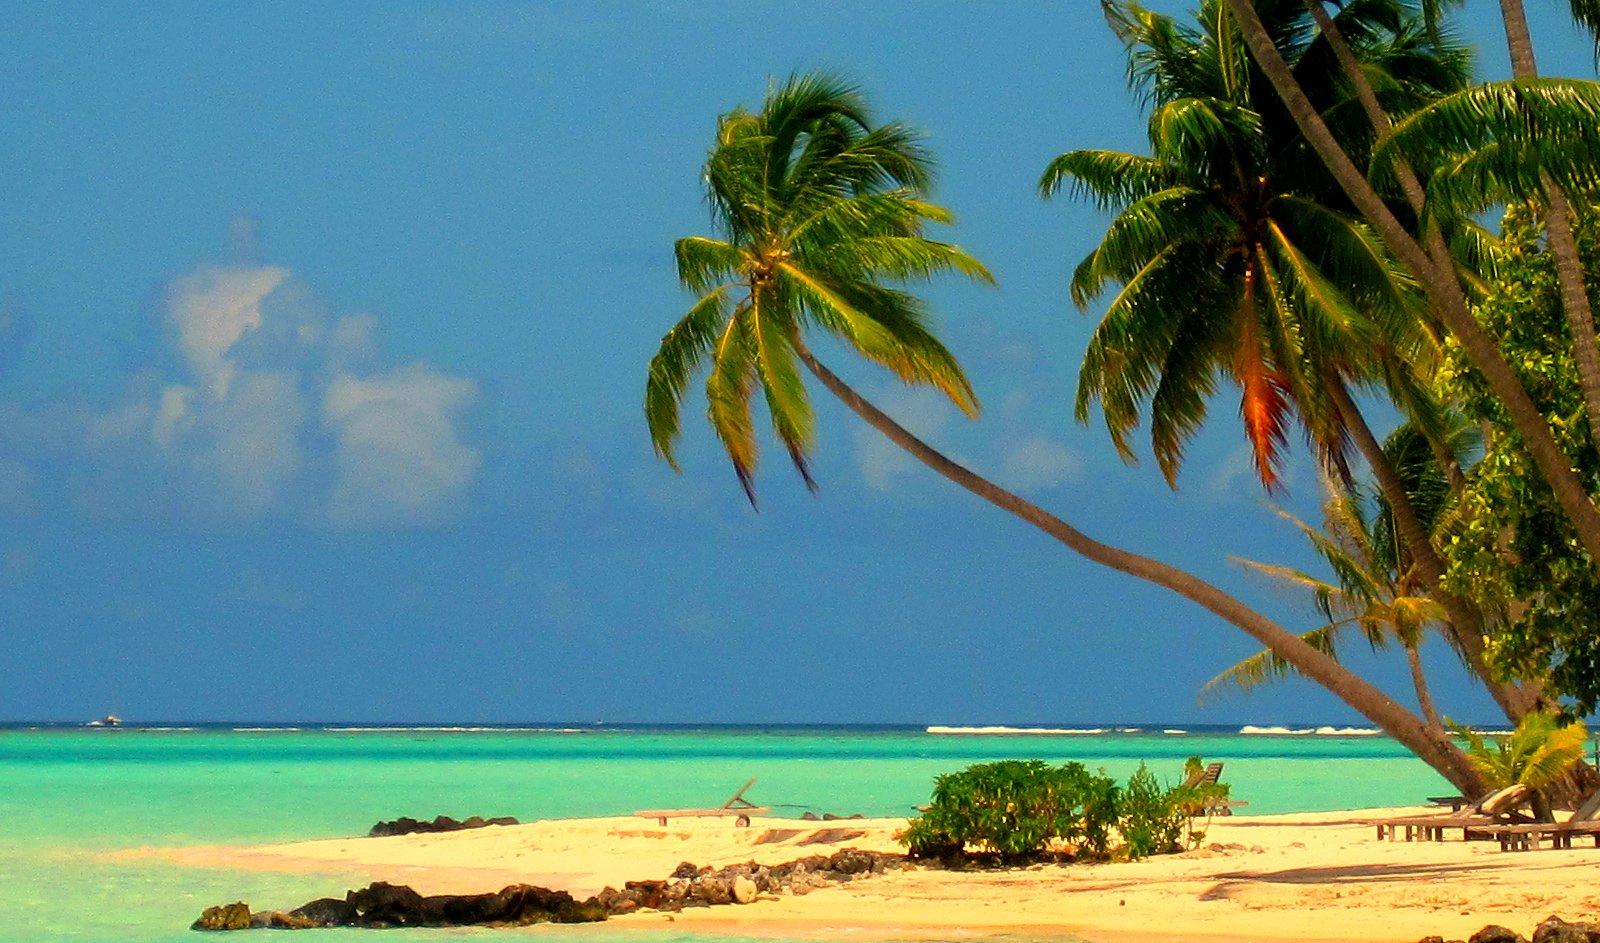 Sandee - Bora Bora Beach